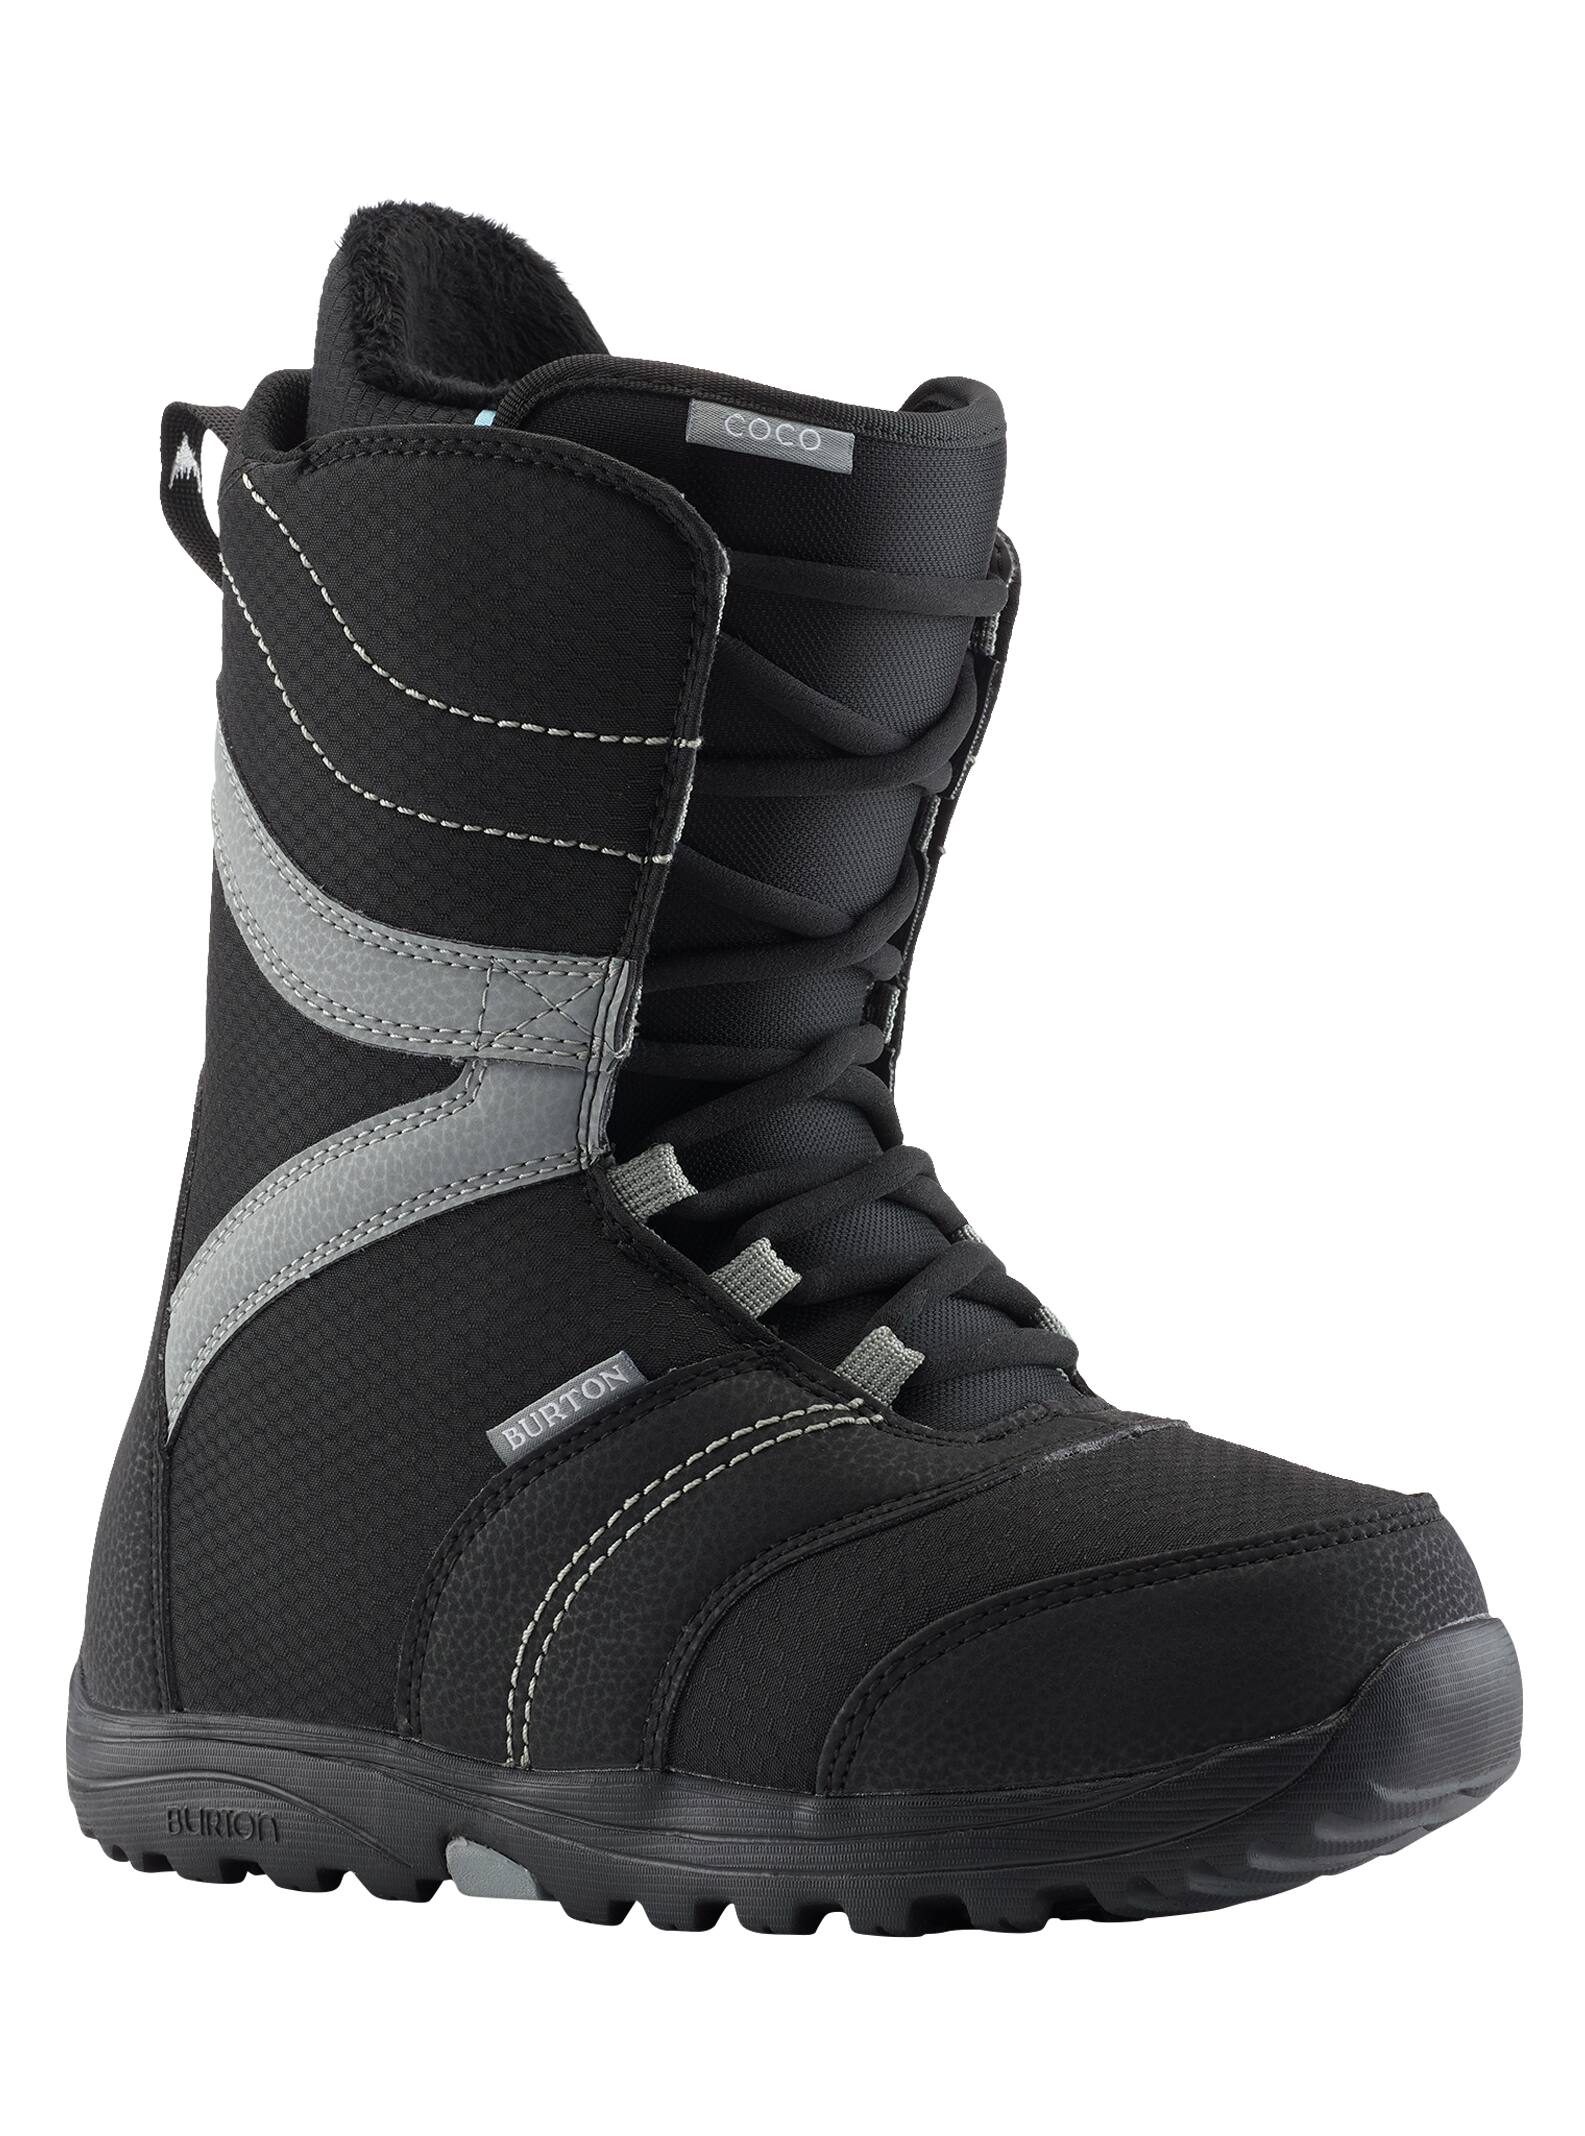 Burton - Boots de snowboard Coco femme, Black, 6.5